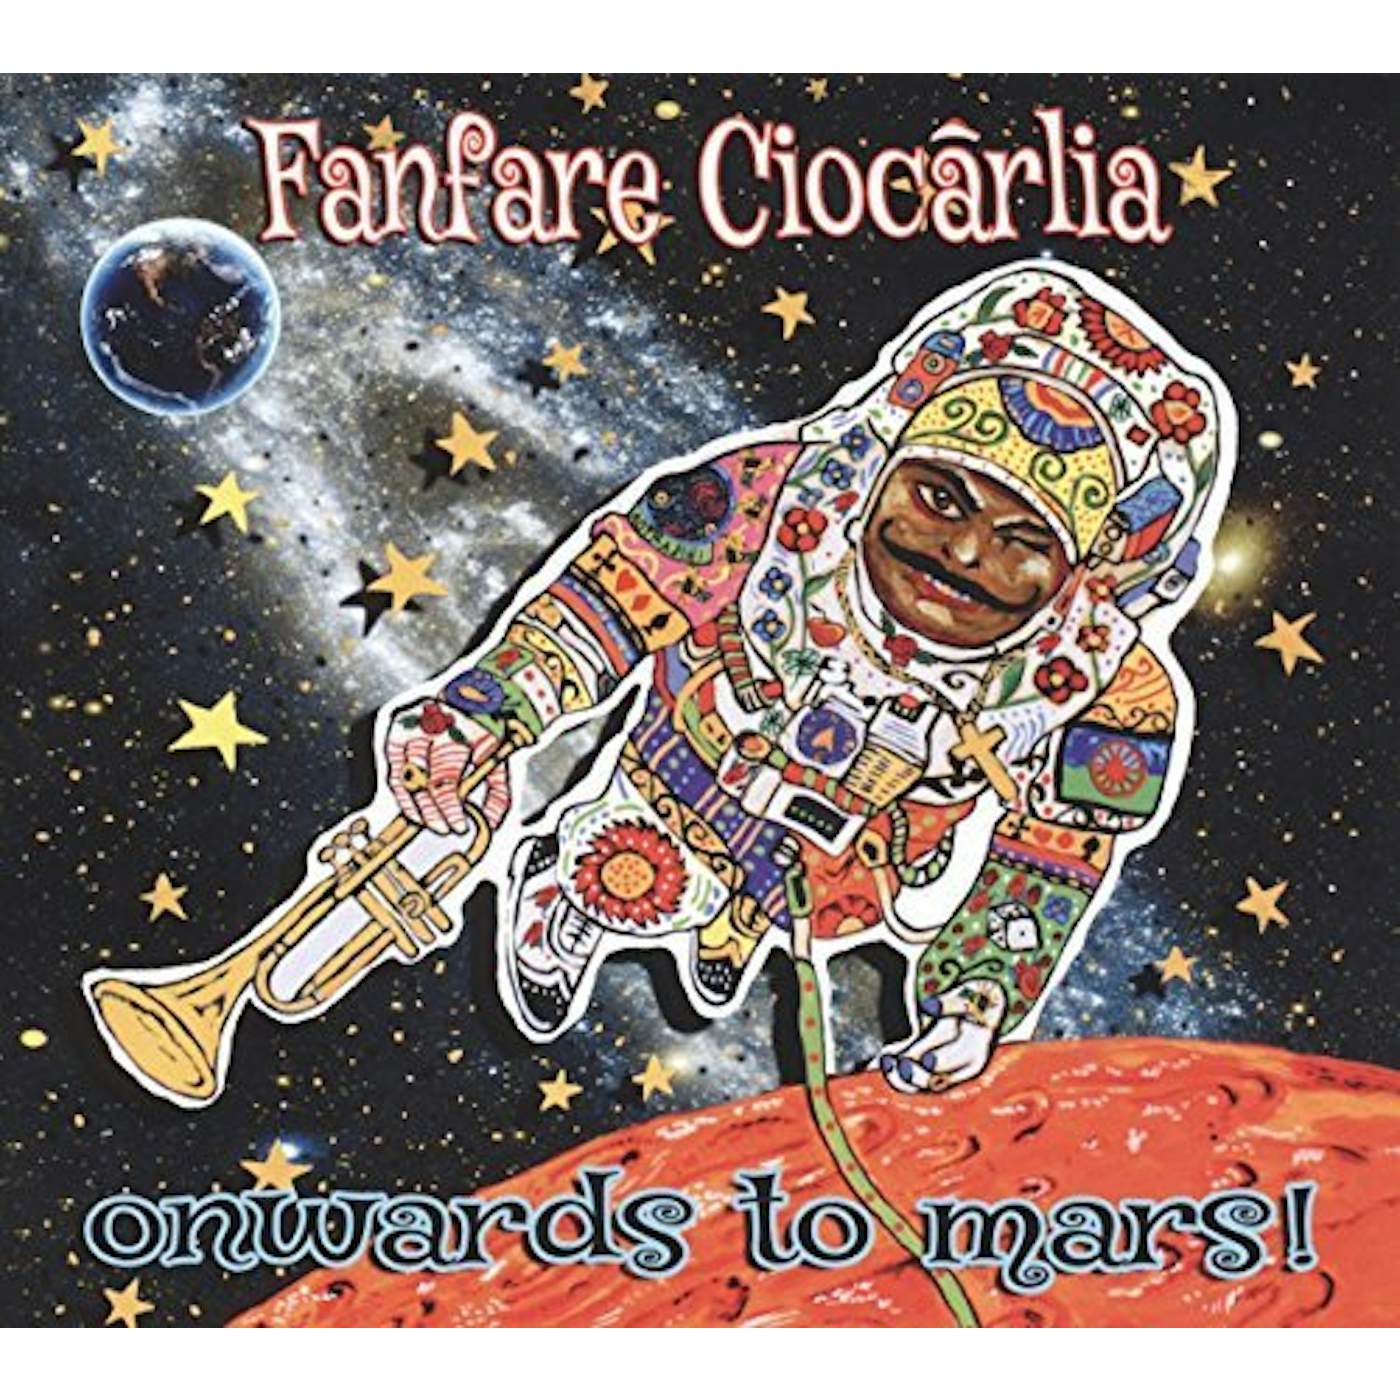 Fanfare Ciocarlia Store: Official Merch & Vinyl